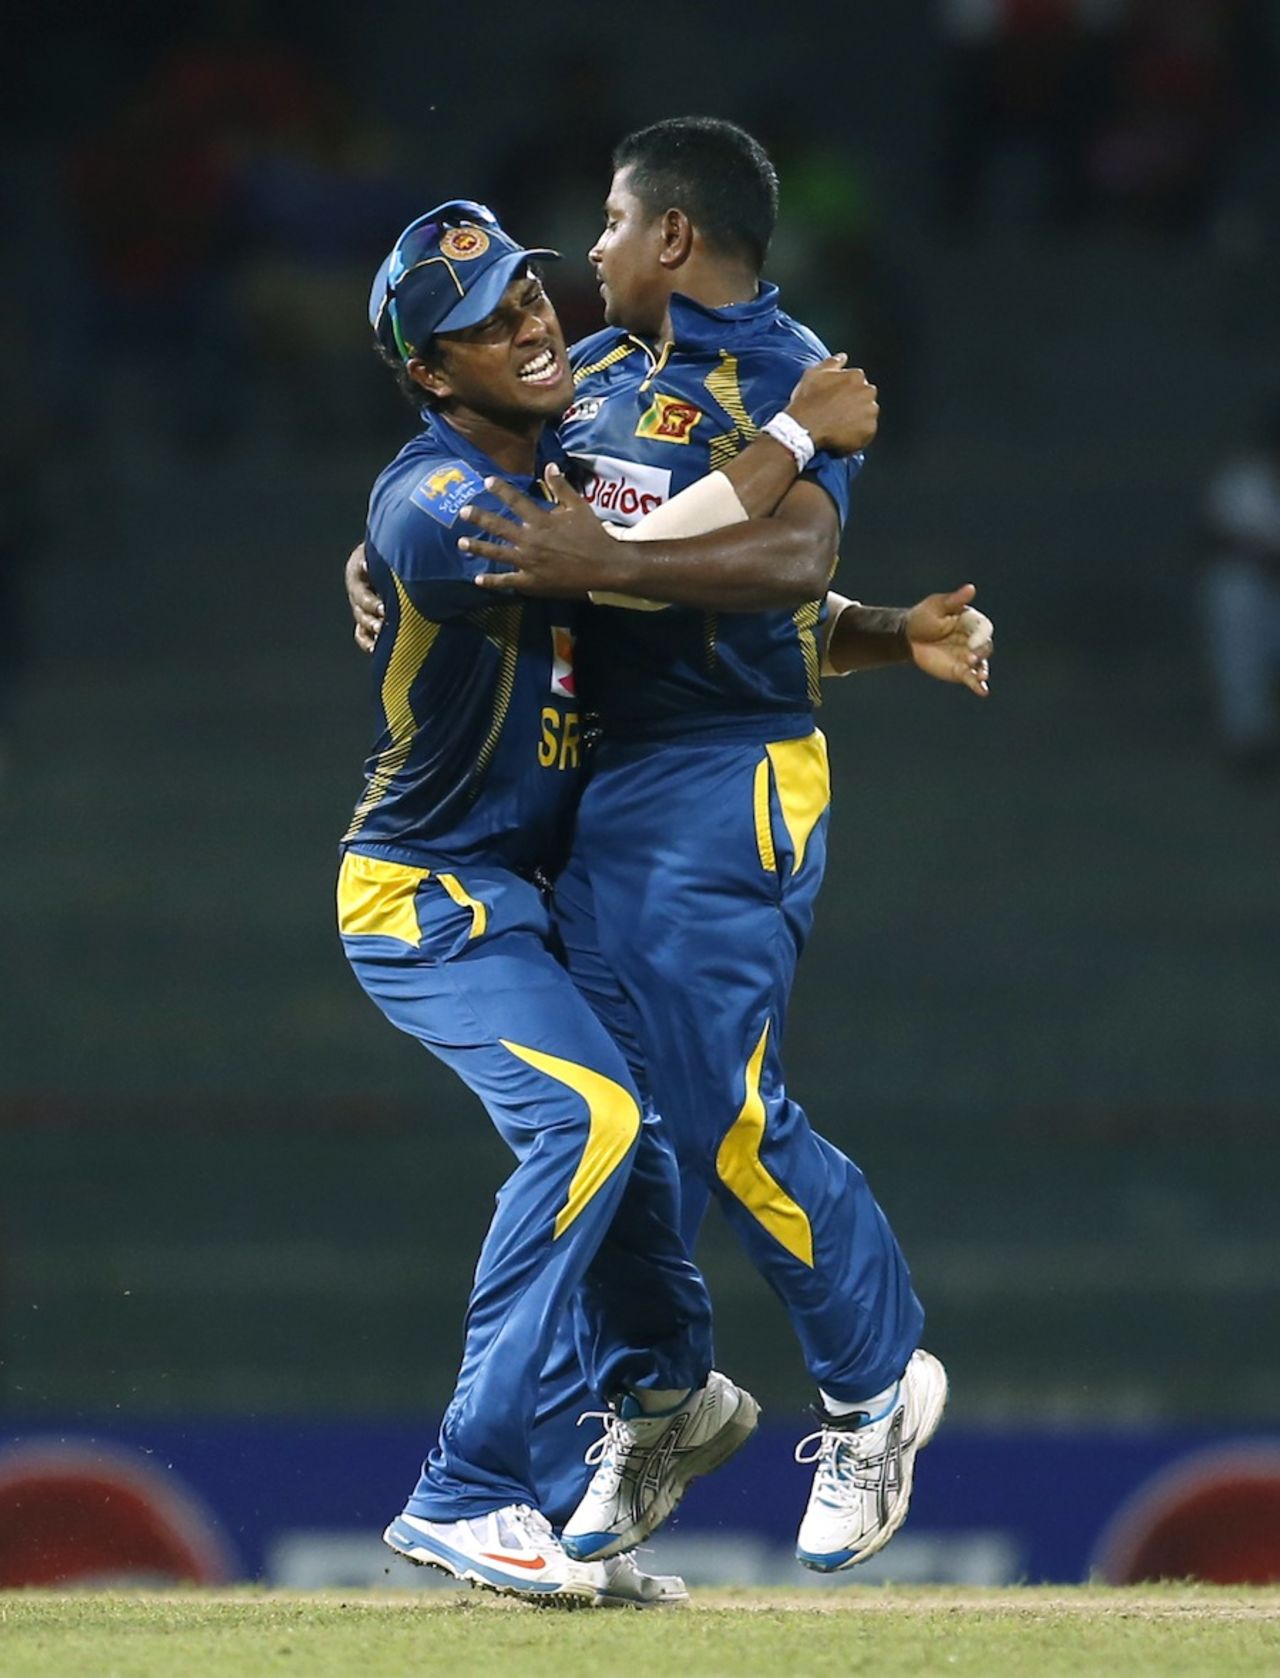 Dinesh Chandimal hugs Rangana Herath after AB de Villiers' wicket, Sri Lanka v South Africa, 1st ODI, Colombo, July 20, 2013